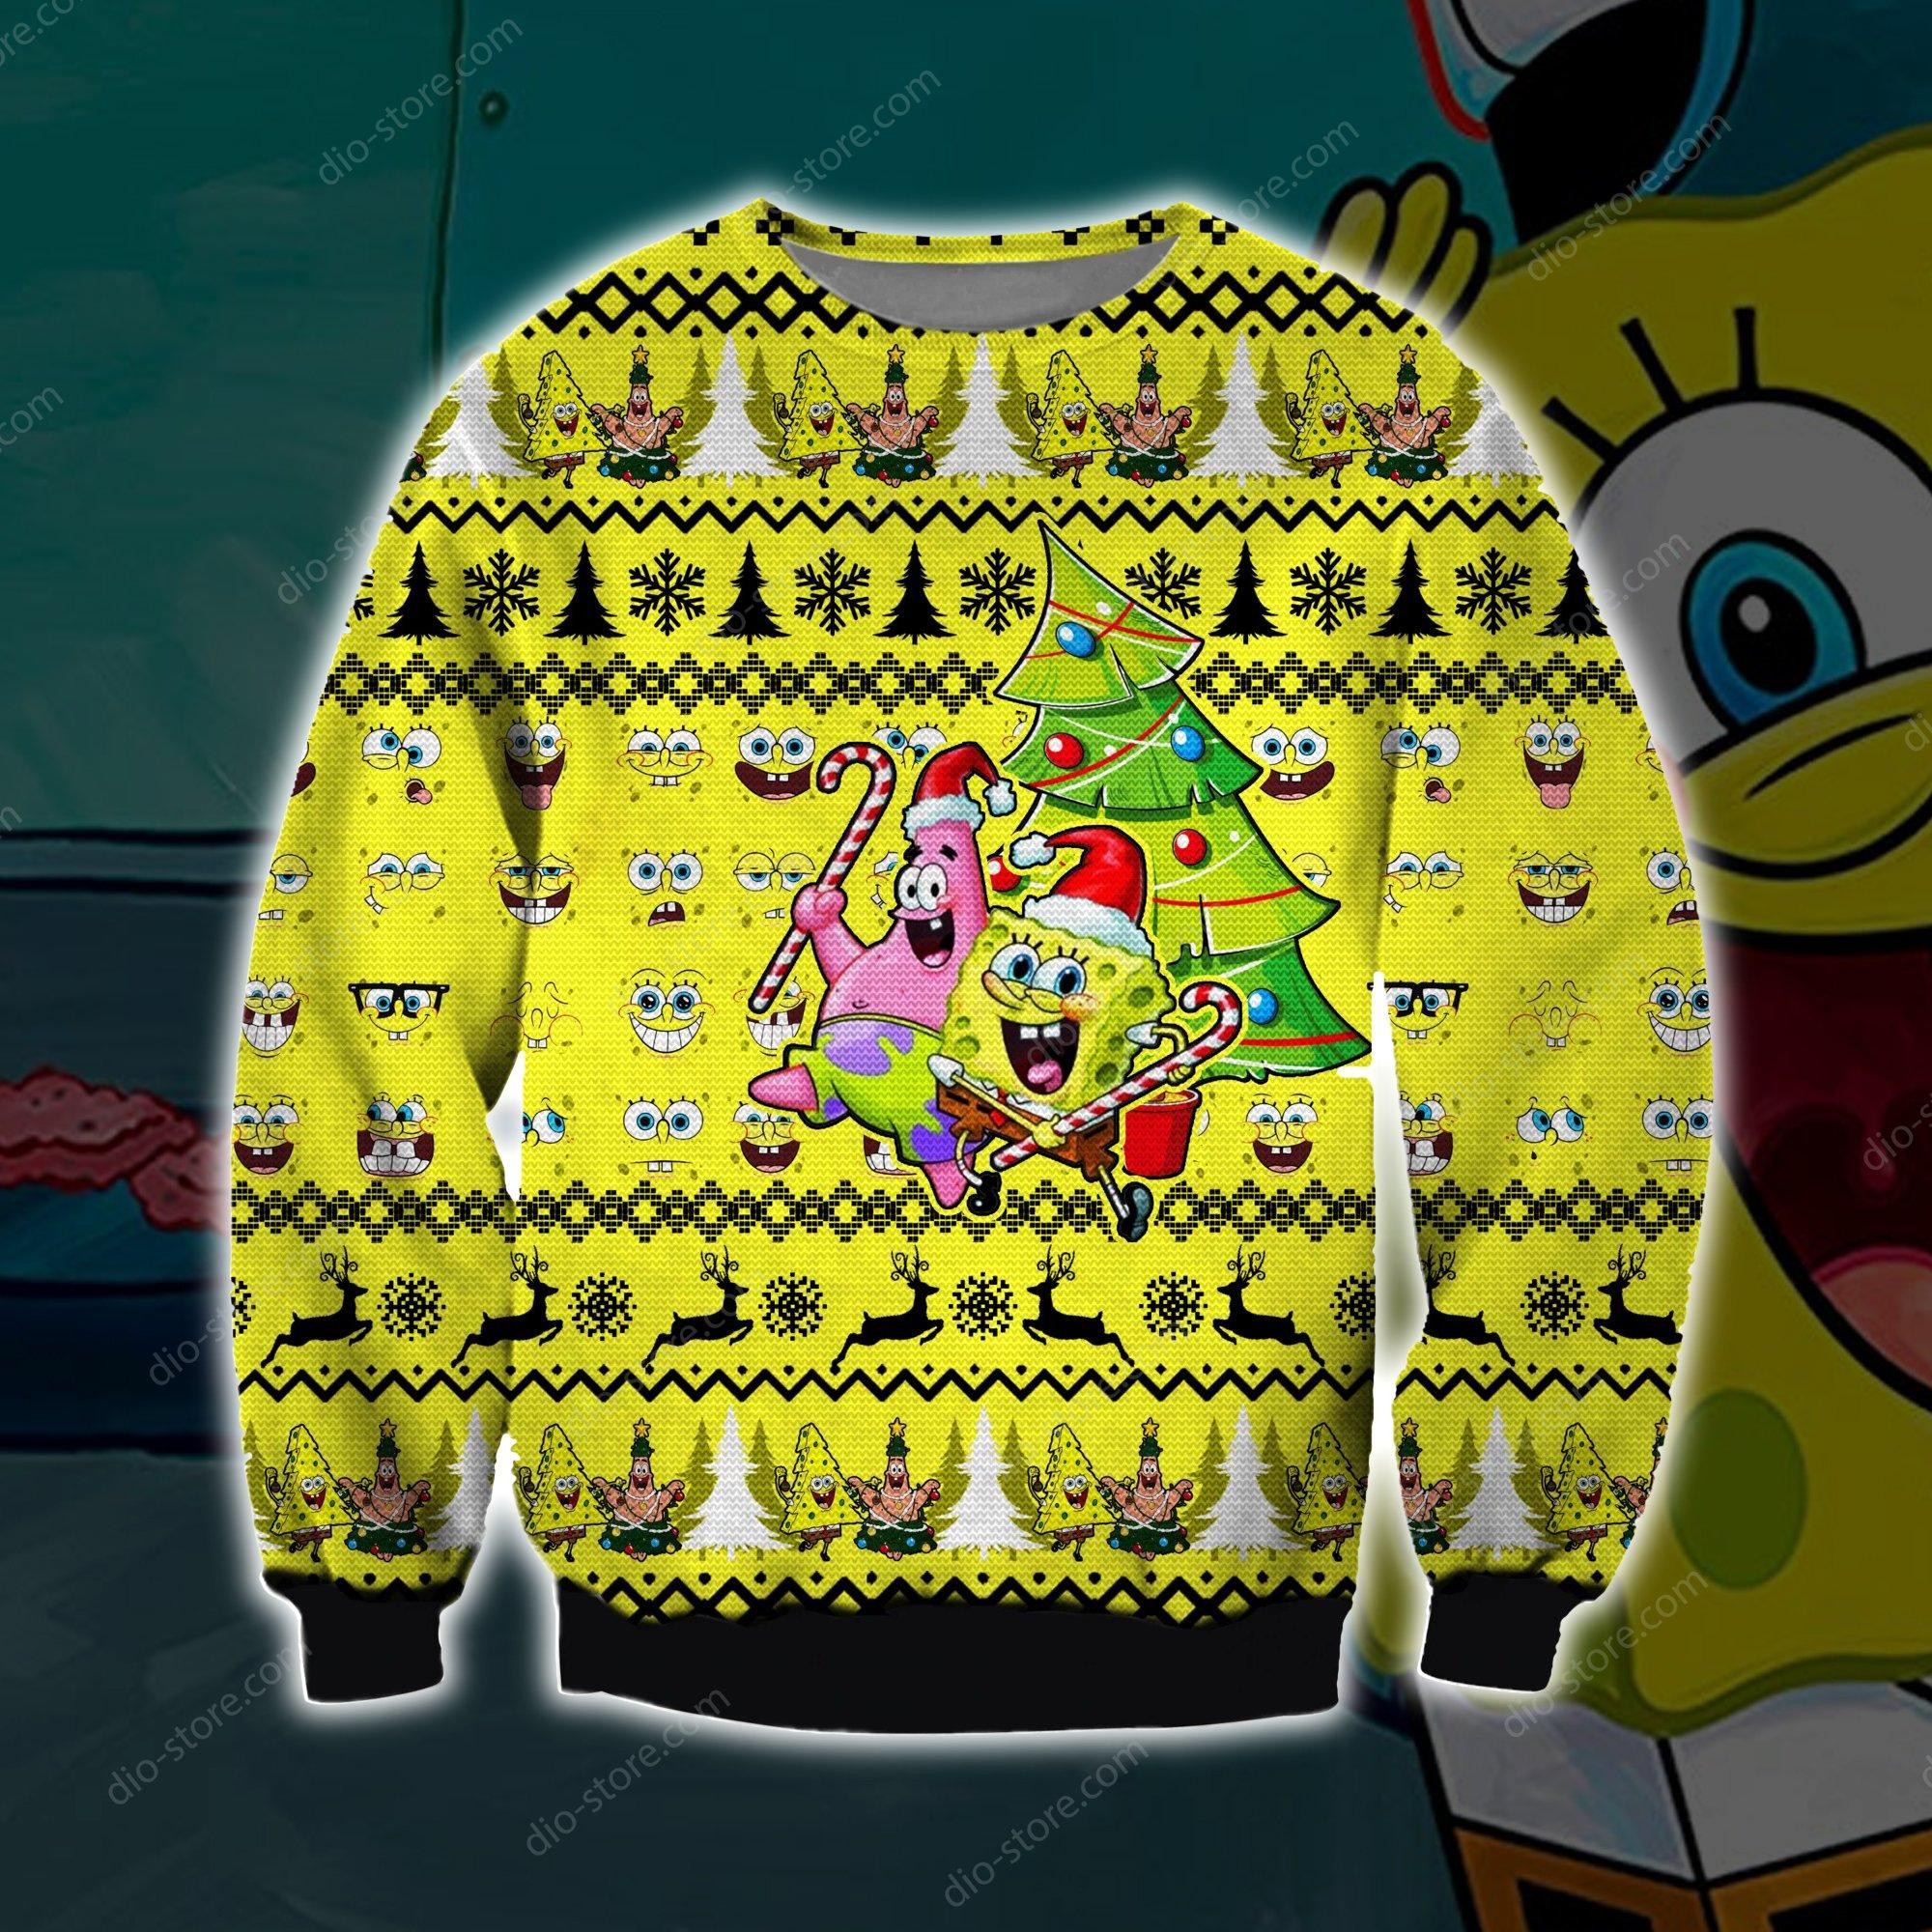 spongebob-knitting-pattern-3d-print-ugly-christmas-sweatshirt-choose